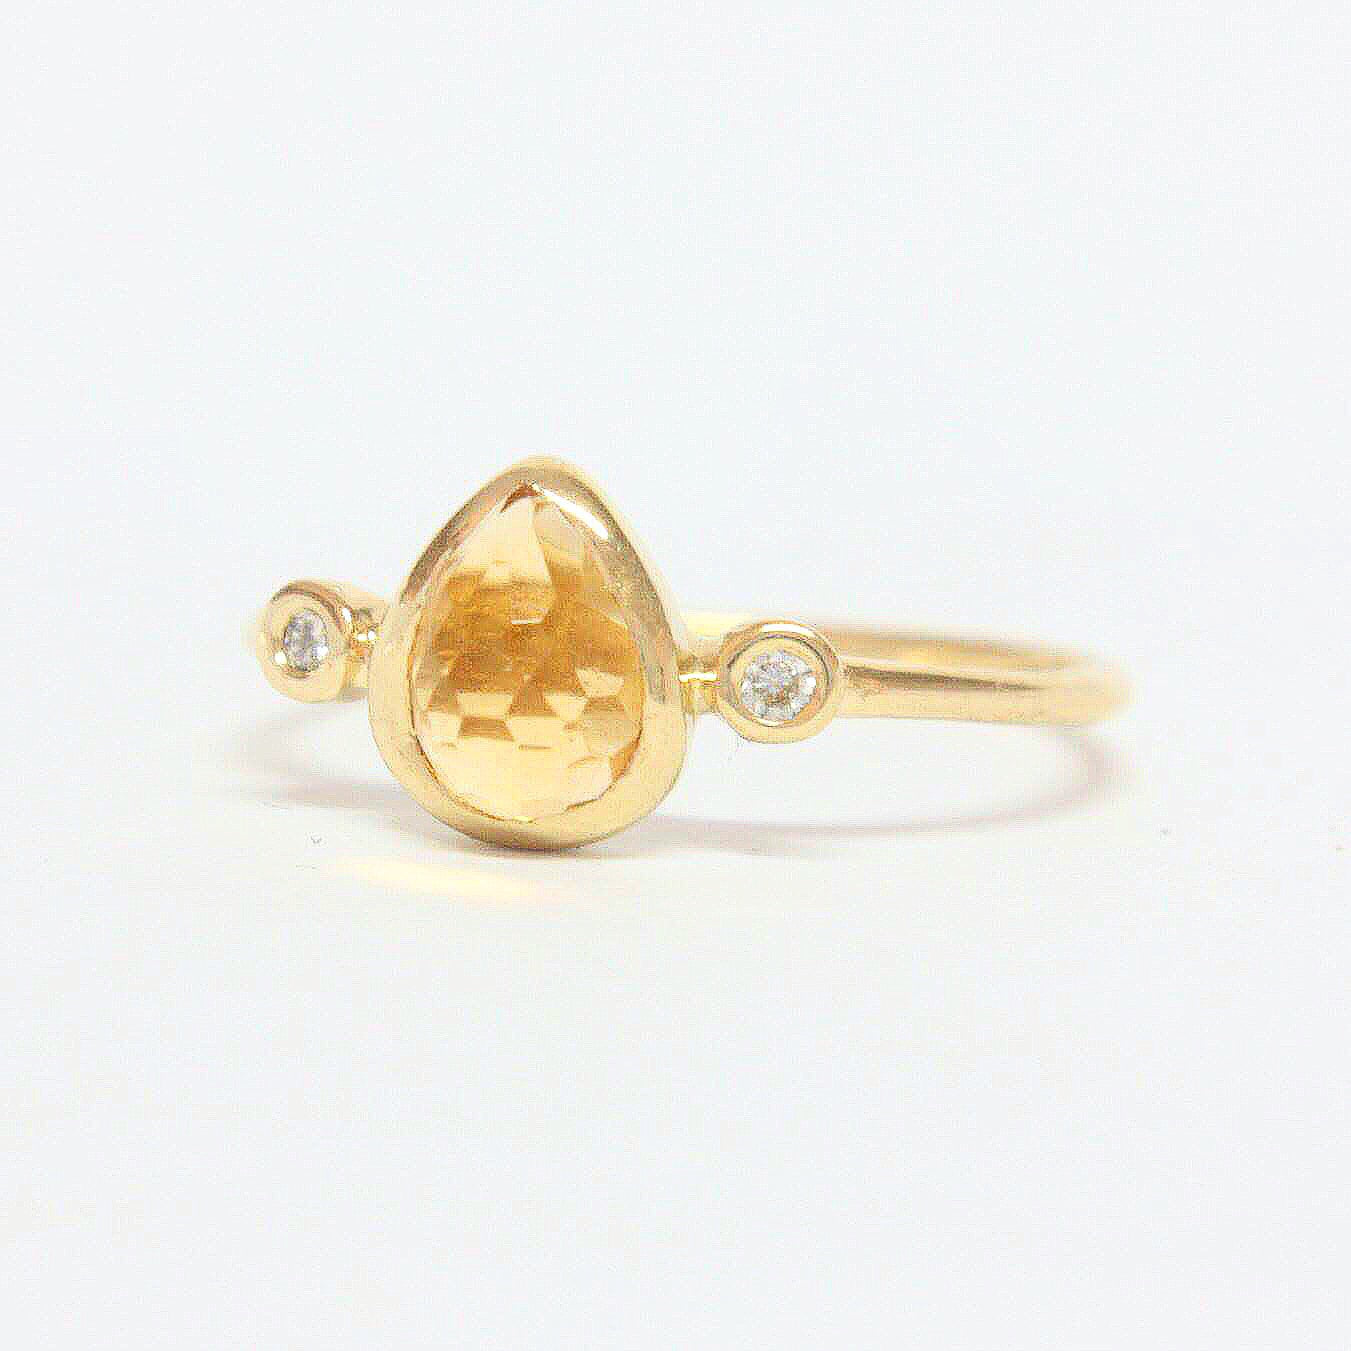 Pear Citrine and Diamond Ring 14k Gold - MANARI.eu